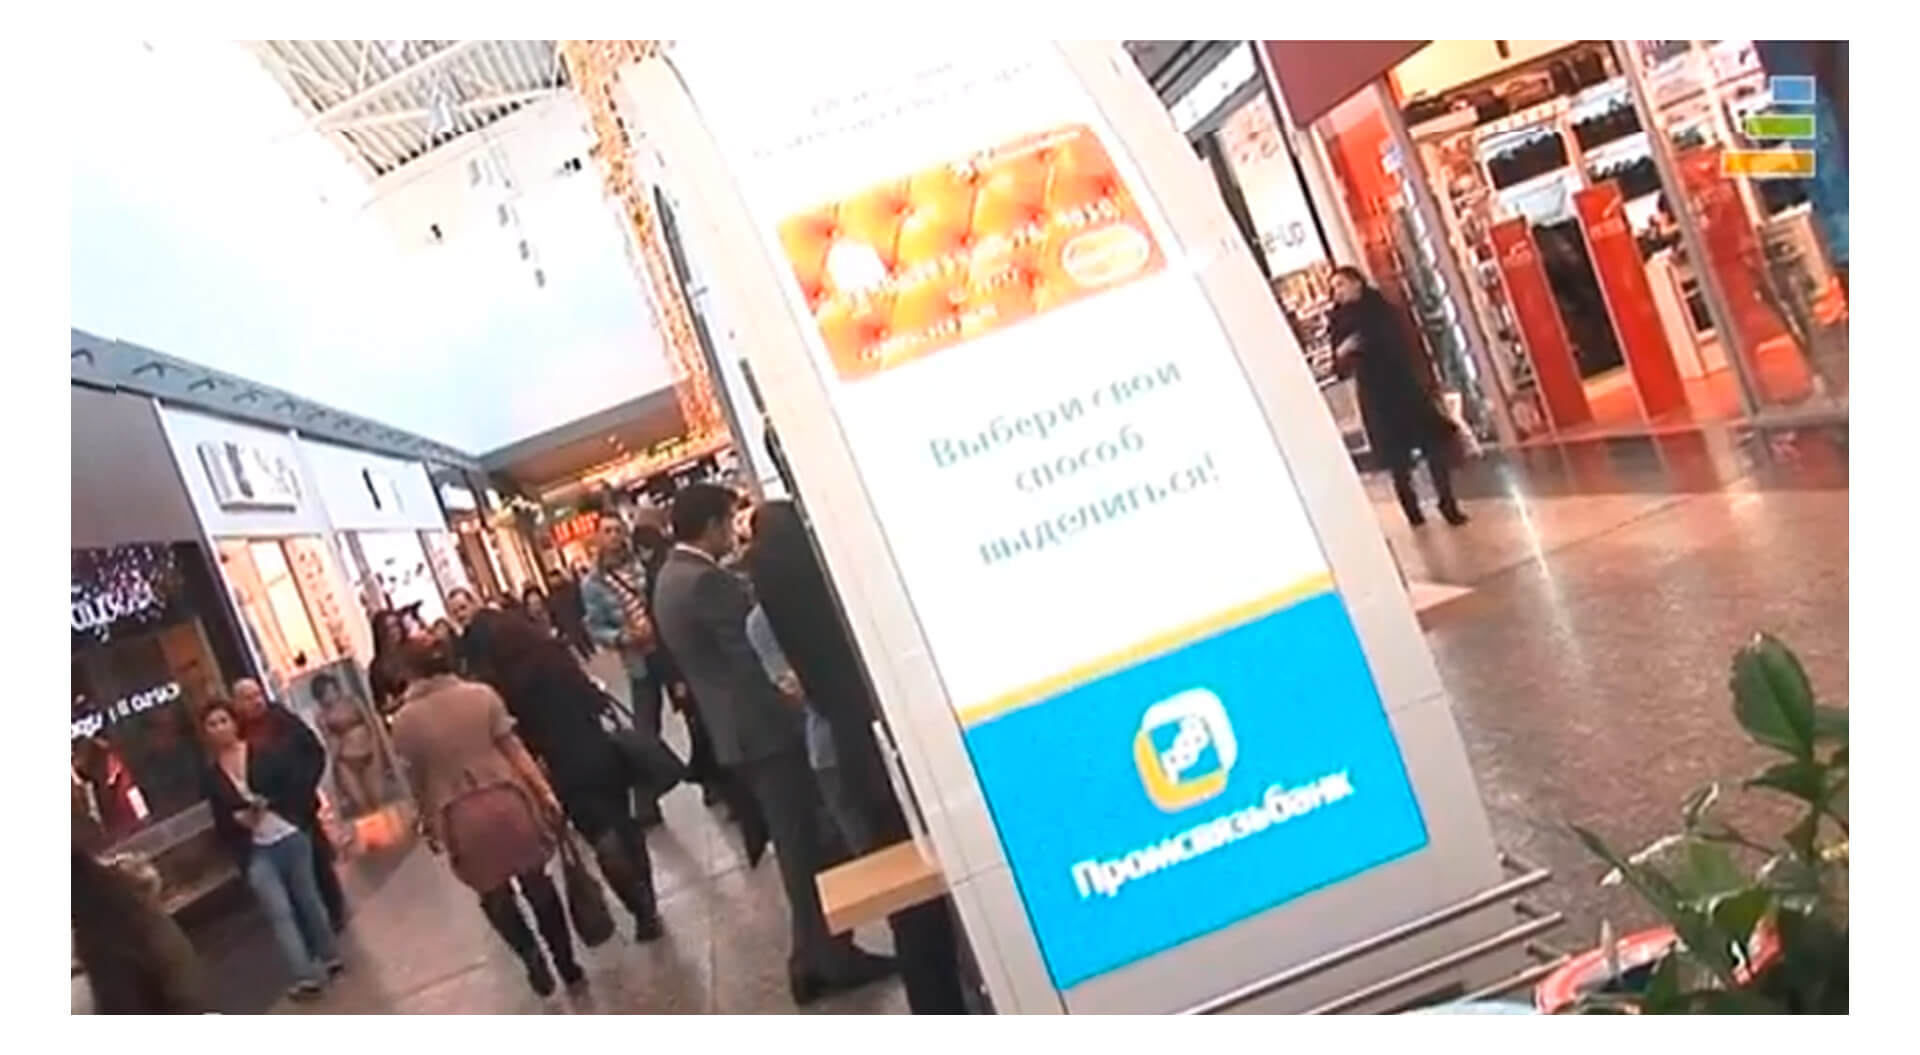 Promsvyazbank digital mini branch in a shopping mall